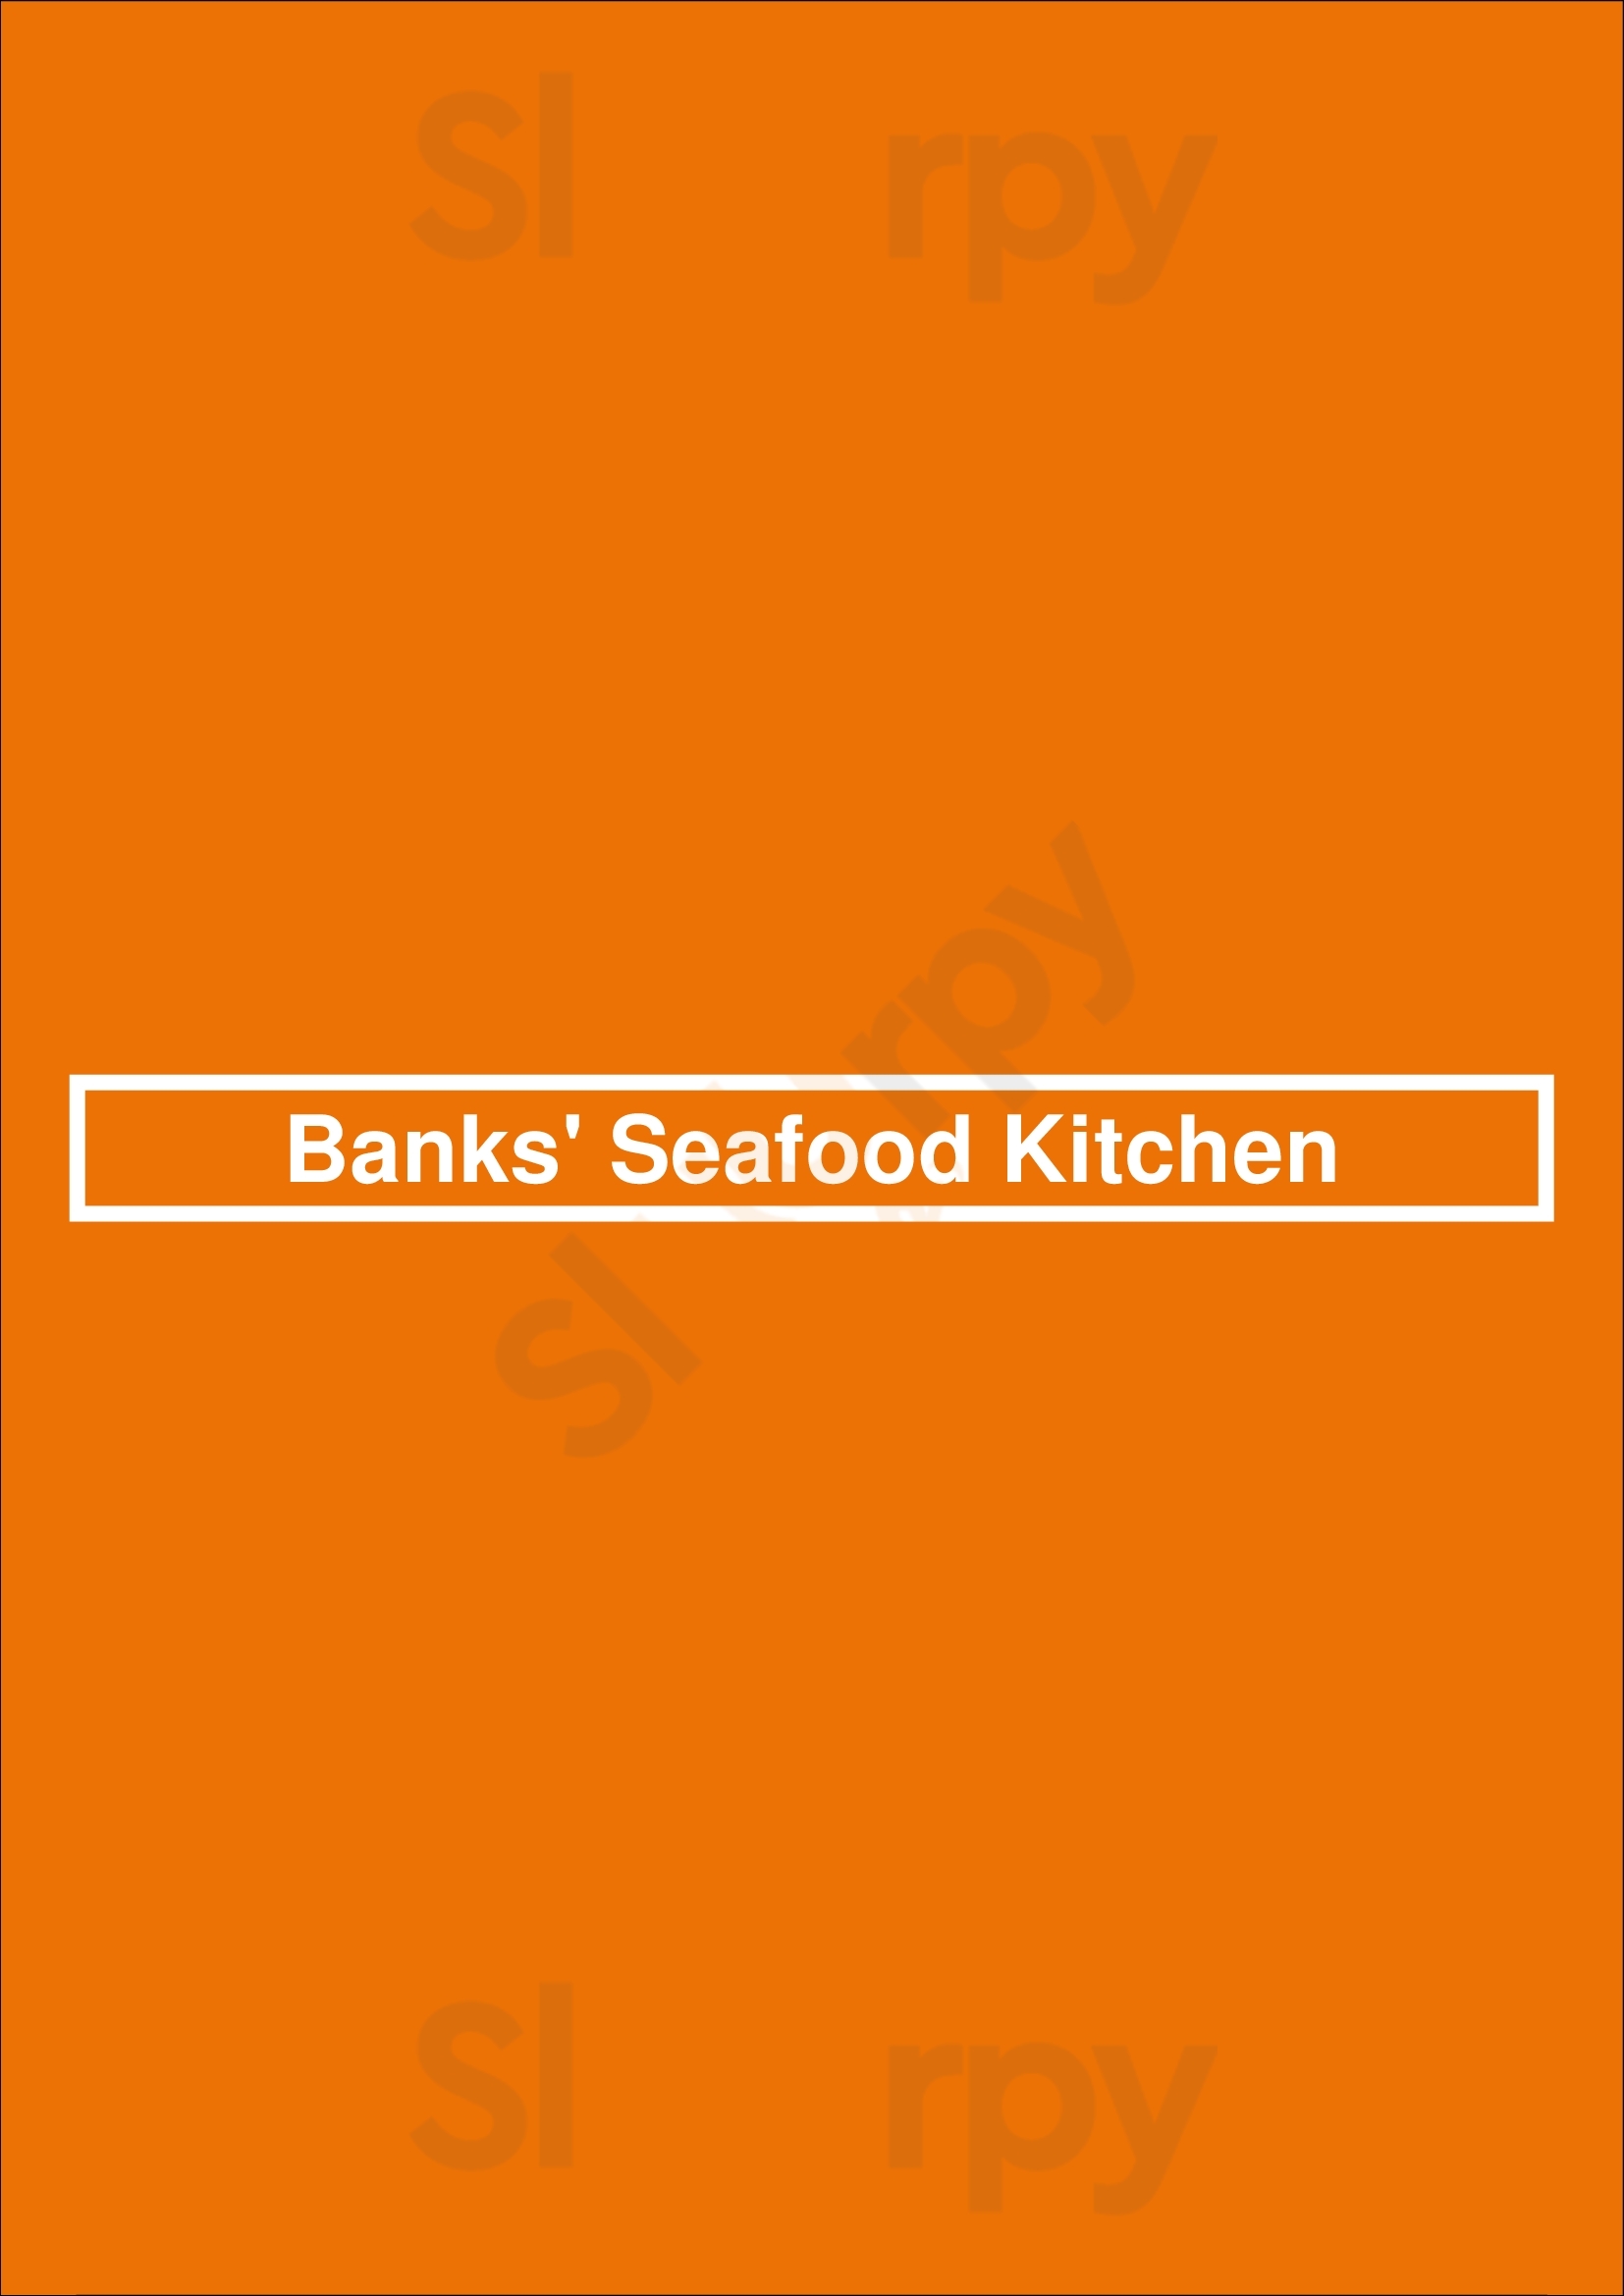 Banks' Seafood Kitchen Wilmington Menu - 1